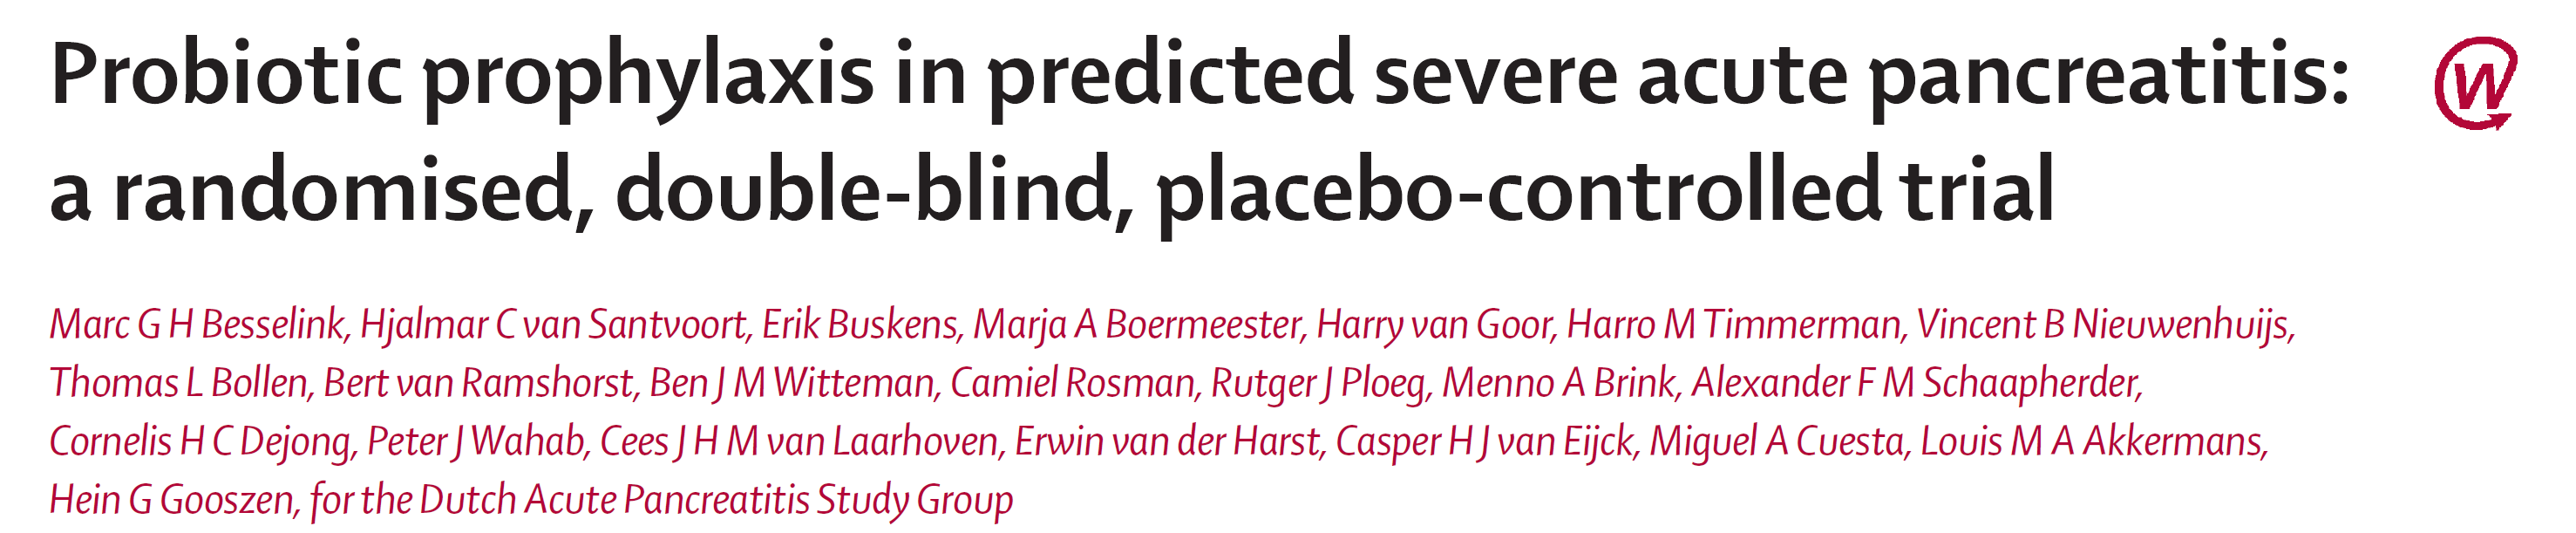 Ockenga J et al. Aktuel Ernahrungsmed 2014; 39: e43 e56 Schwere Akute Pankreatitis Probiotika?